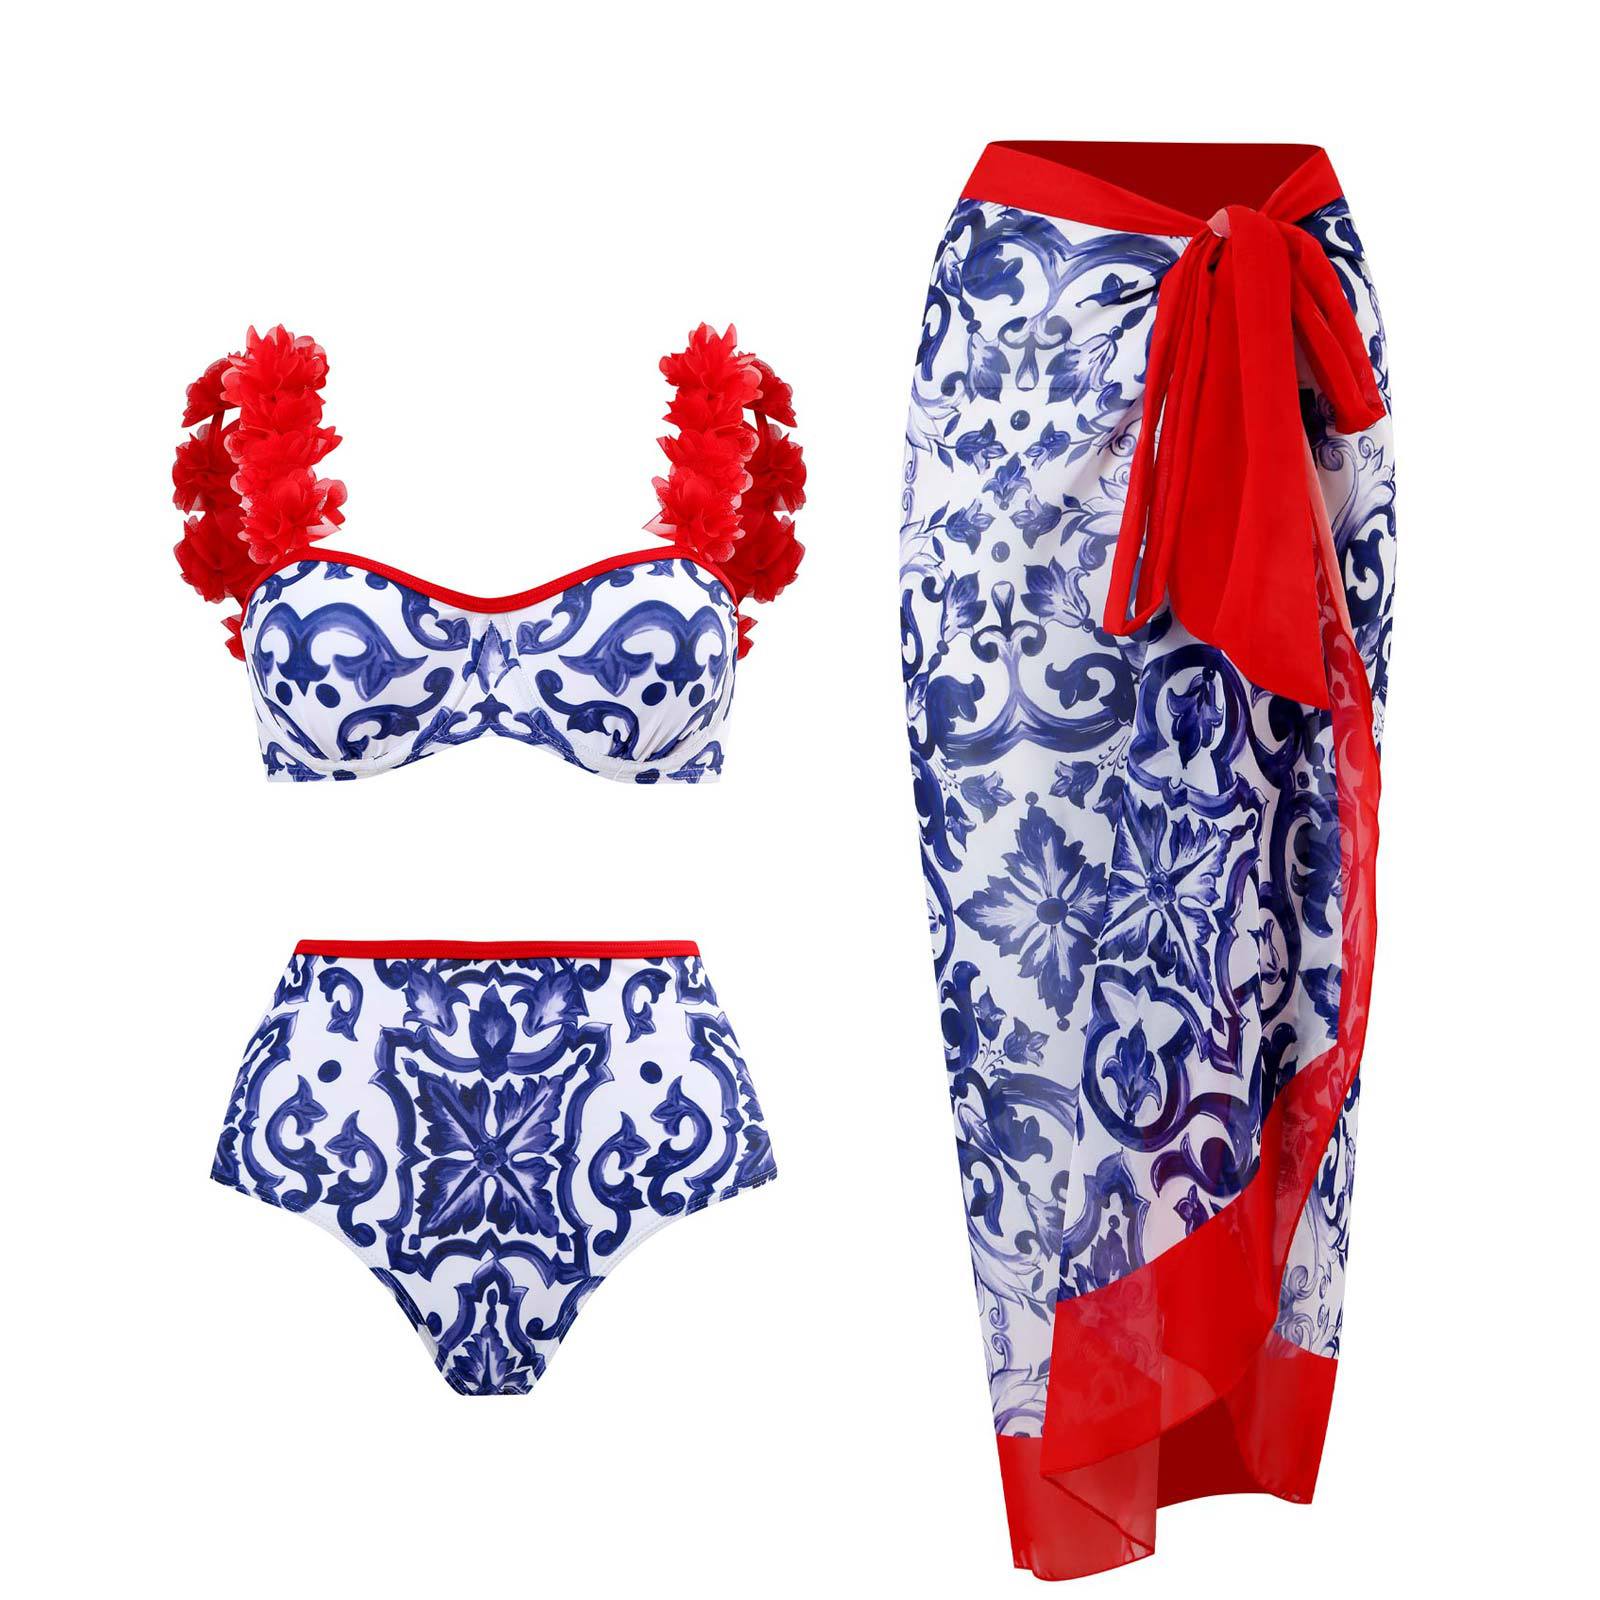 New 2-Piece Women Bikini Set Push Up Floral Printed Ruffle Bikini Strappy Bandage Swimwear Brazilian Biquini Bathing Suit QJY86R3